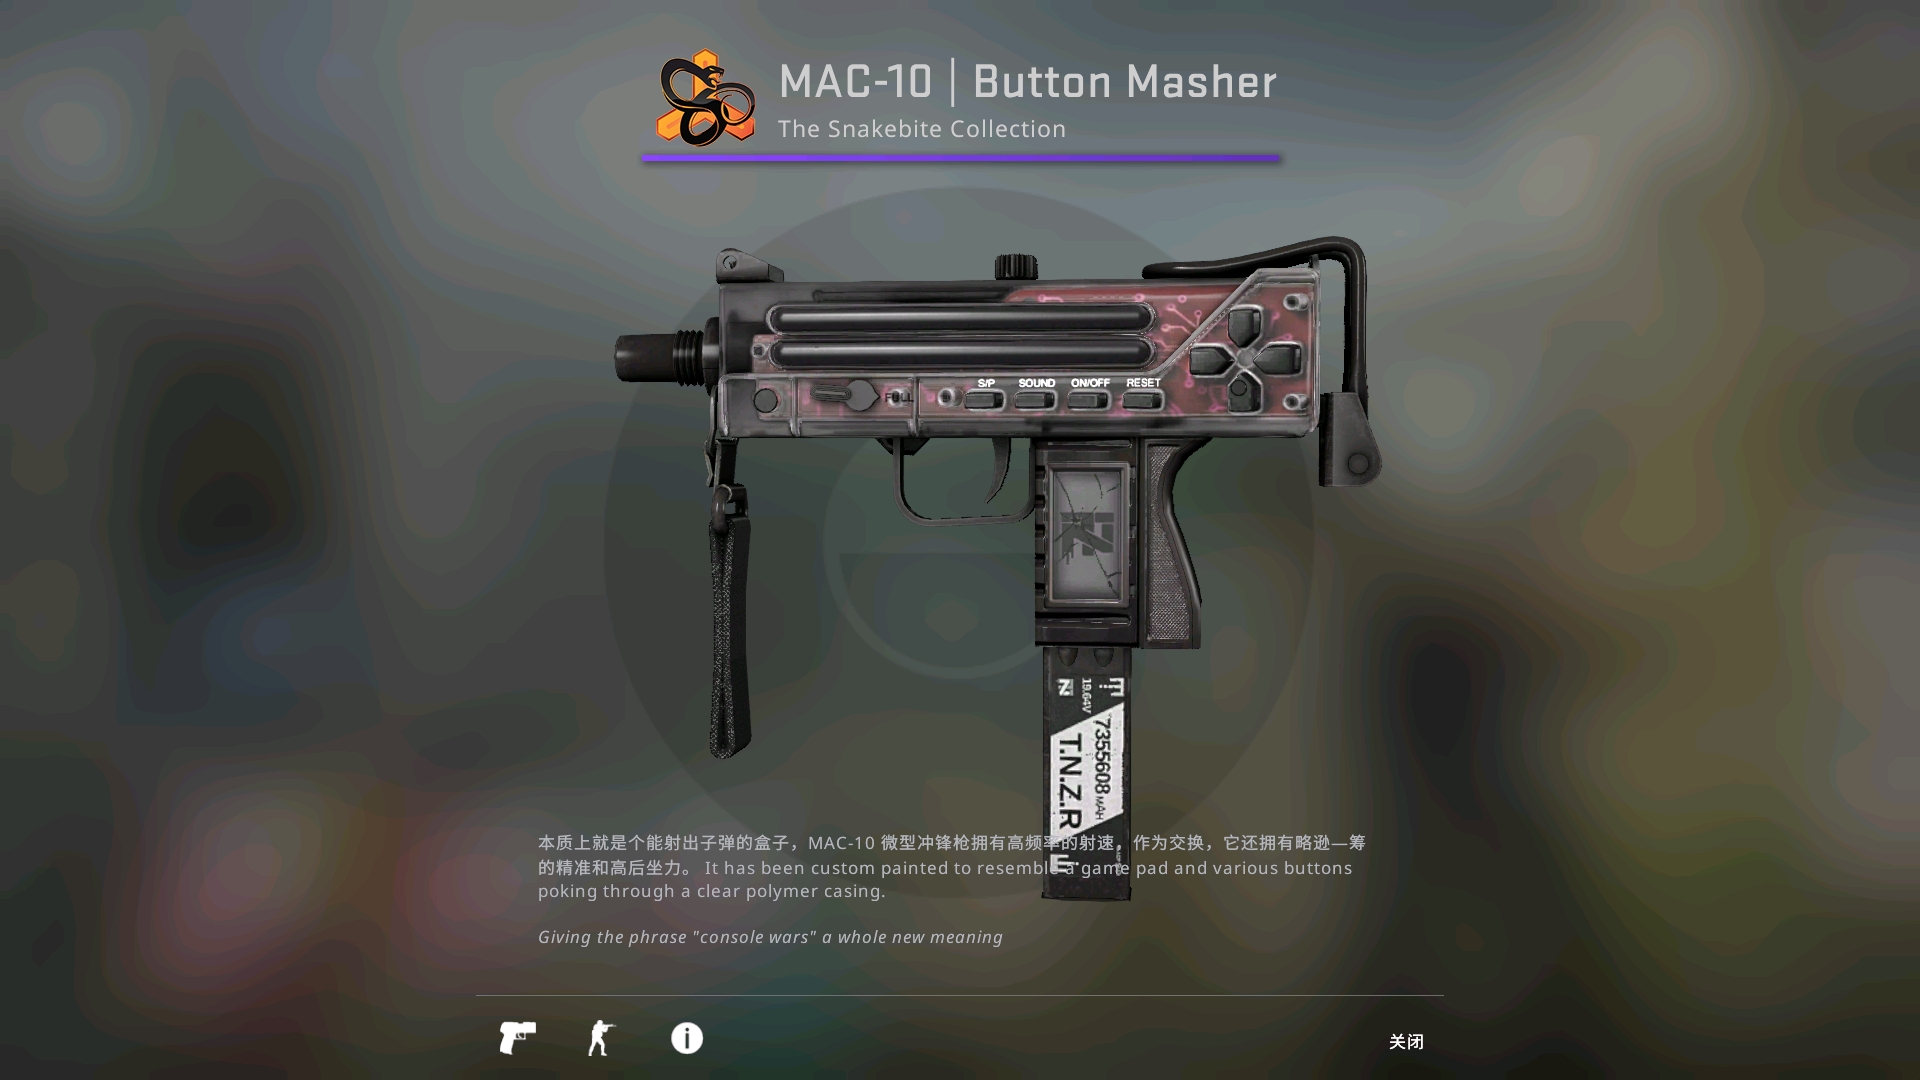 MAC-10 Button Masher cs go skin instaling